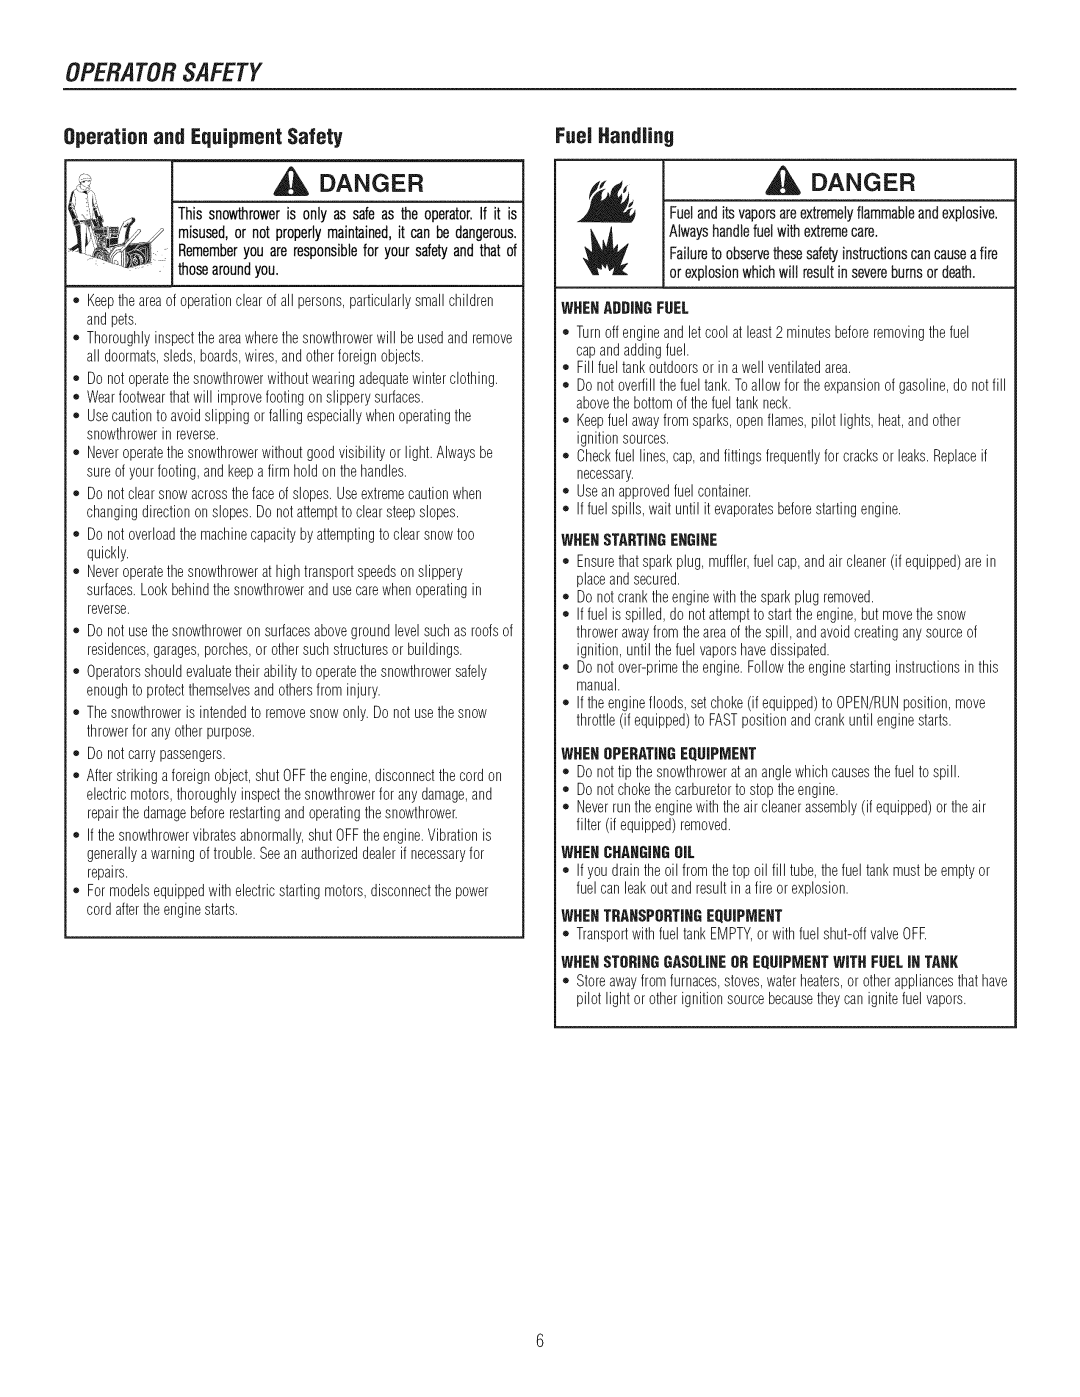 Craftsman C950-52943-0 owner manual Operatorsafety, Danger, Operationand EquipmentSafety, Fuel Handling 